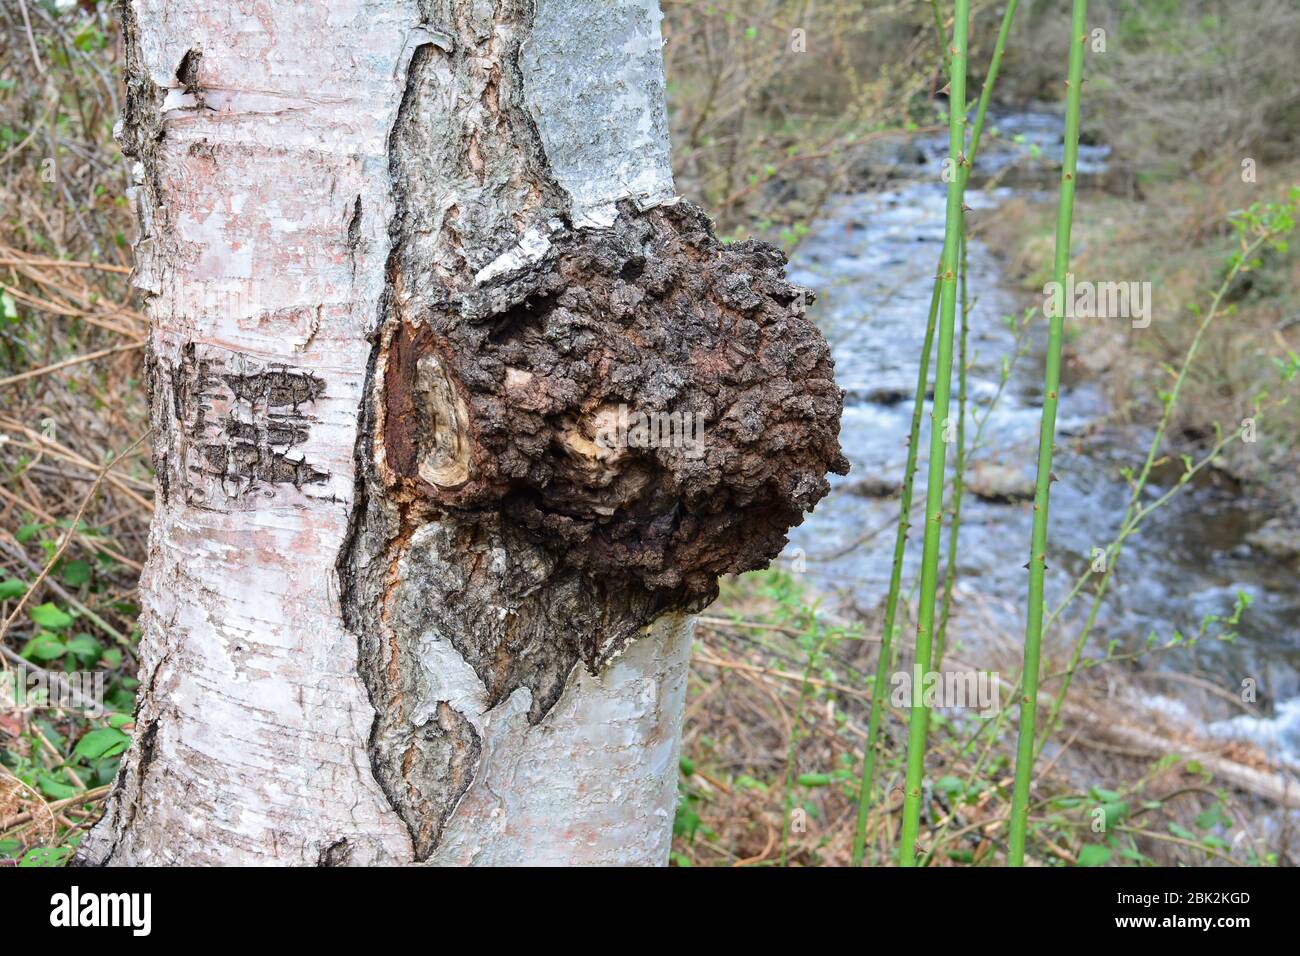 Inonotus obliques or Chaga mushroom in natural habitat, on a birch tree near mountain creek, curative and highly regarded in alternative medicine, it Stock Photo